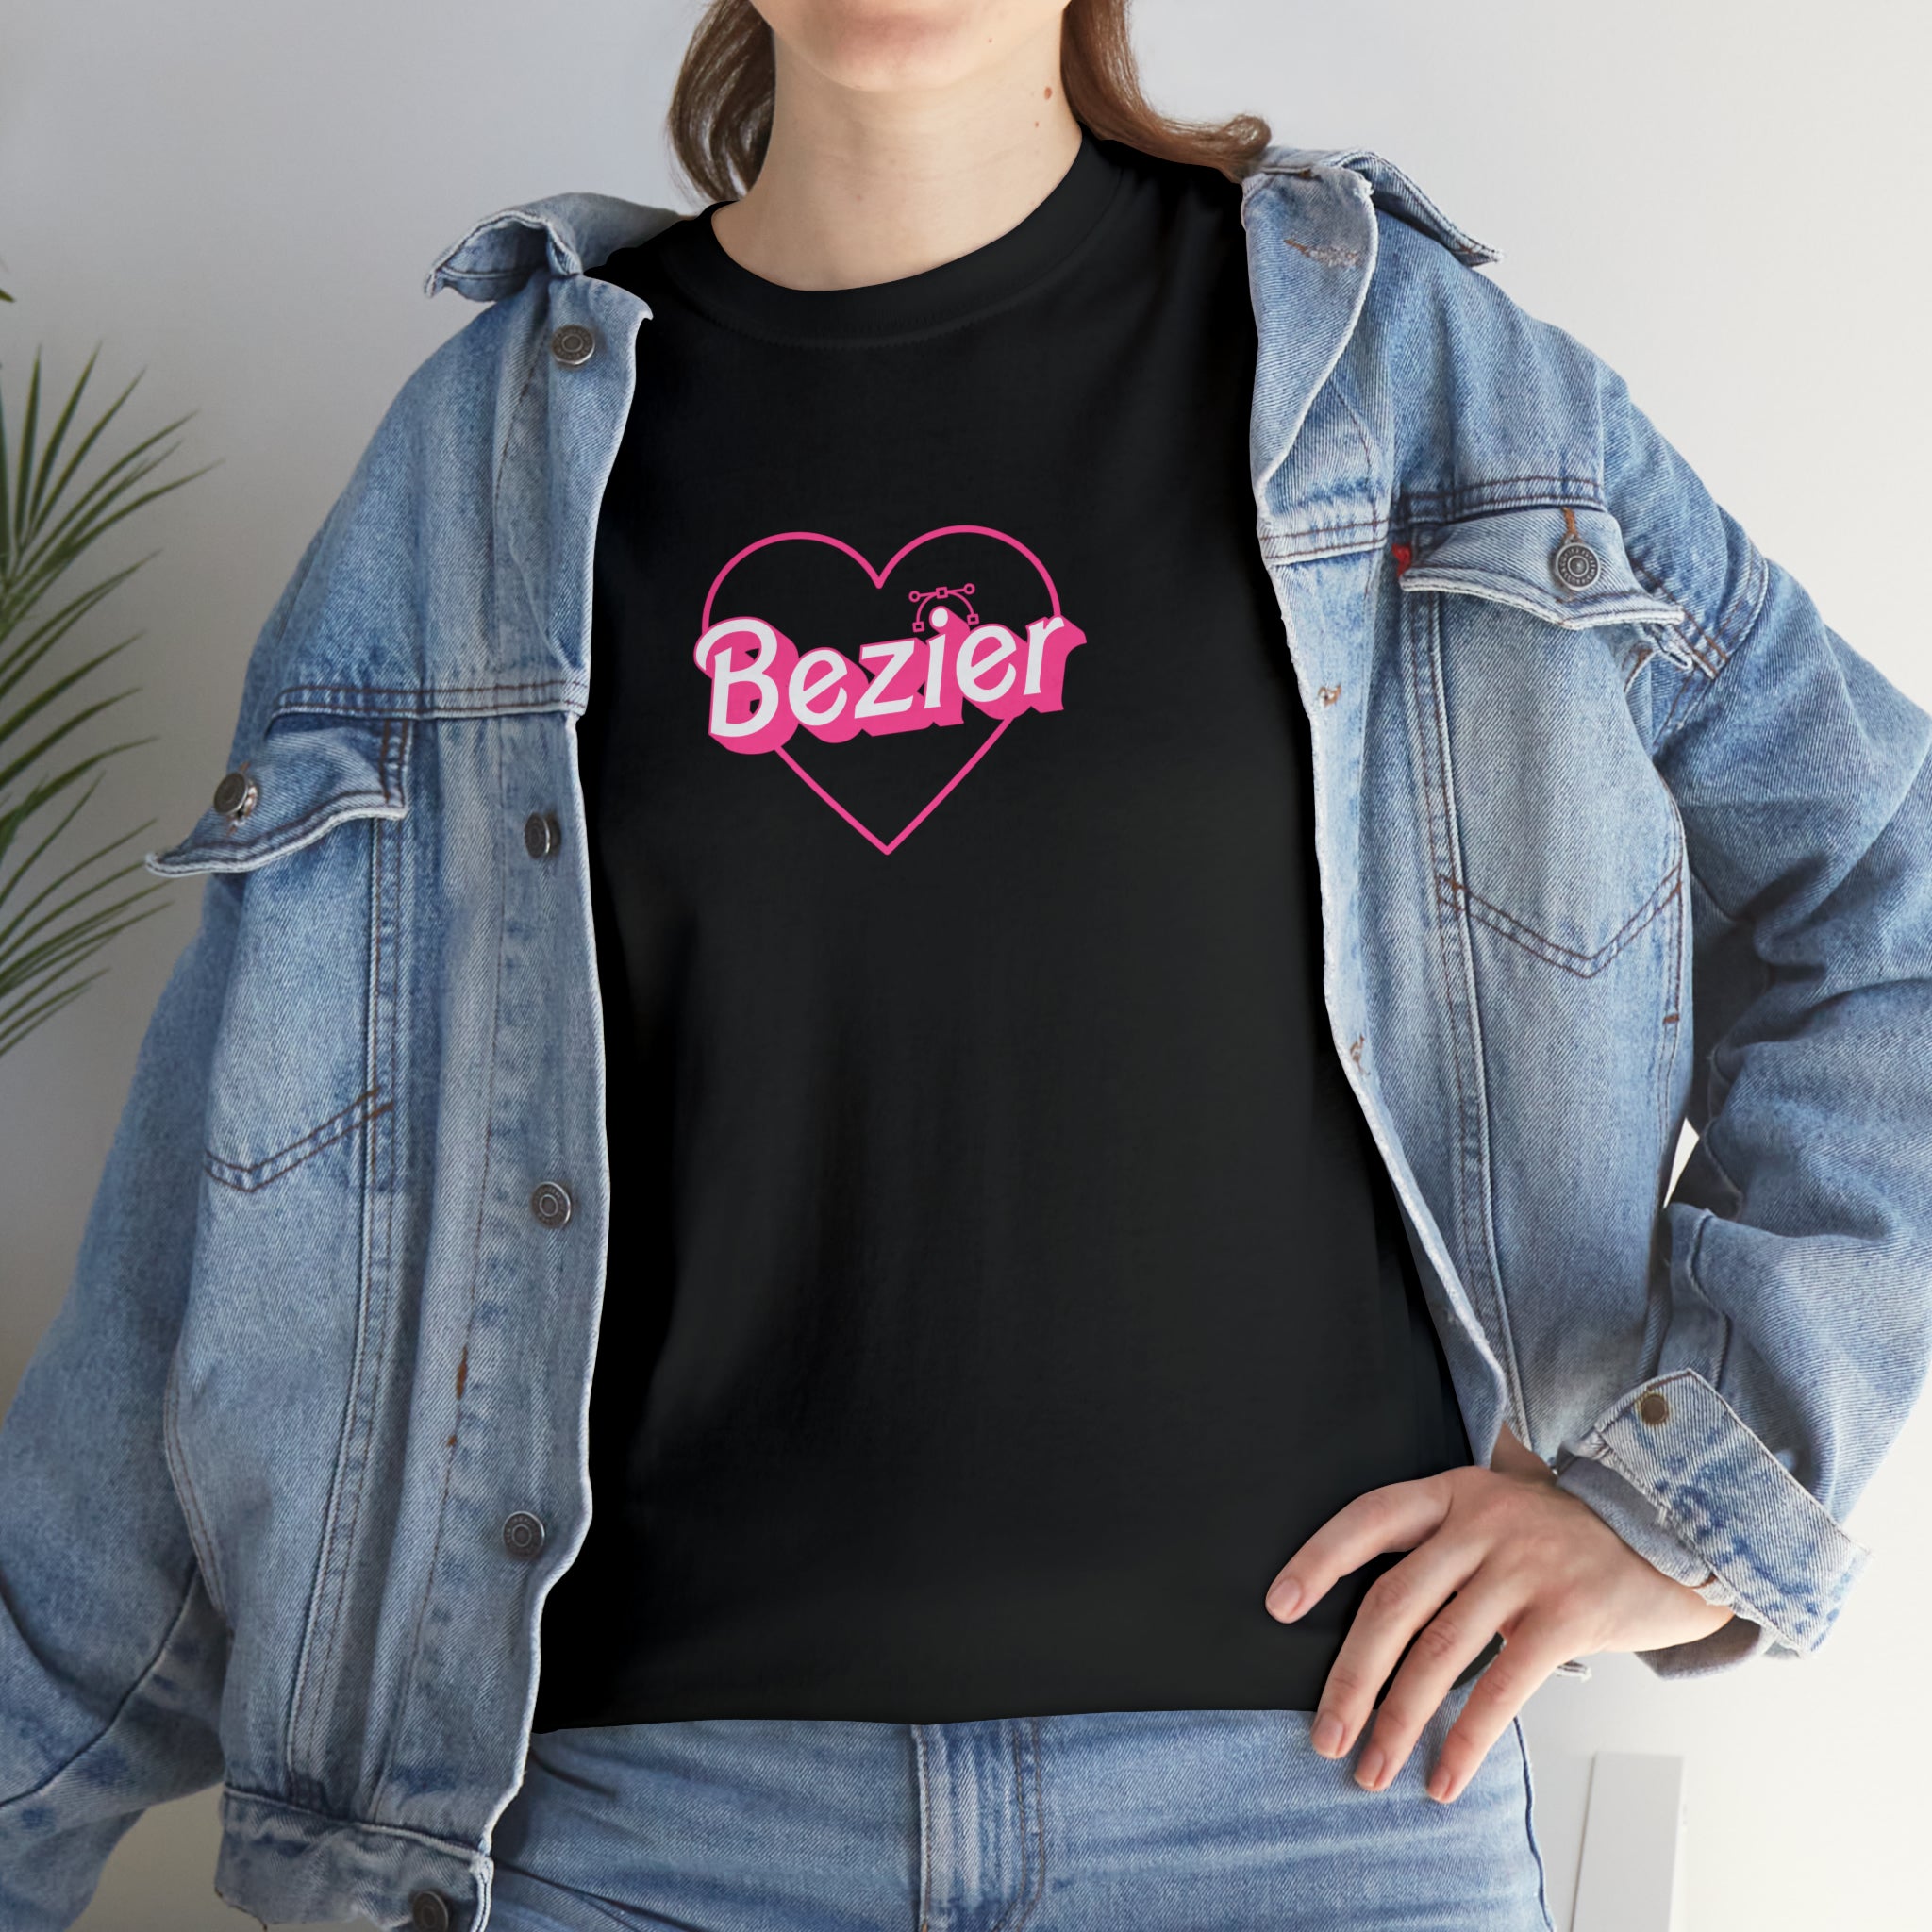 Bezier Girl in a Bezier World T Shirt Unisex